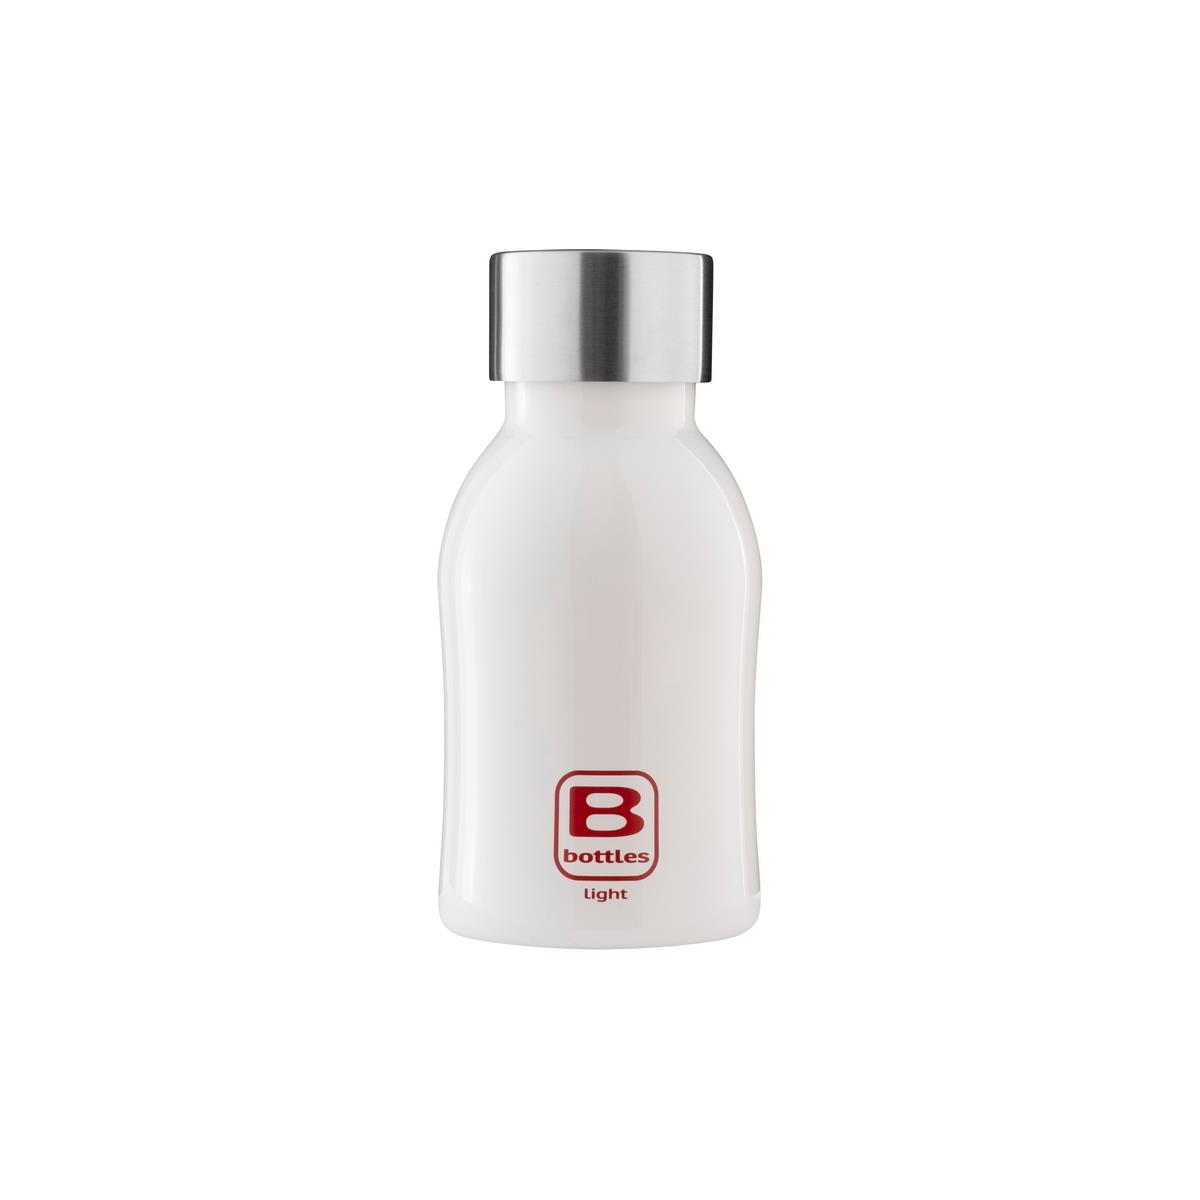 photo B Bottles Light - Bright White - 350 ml - Ultra light and compact 18/10 stainless steel bottle